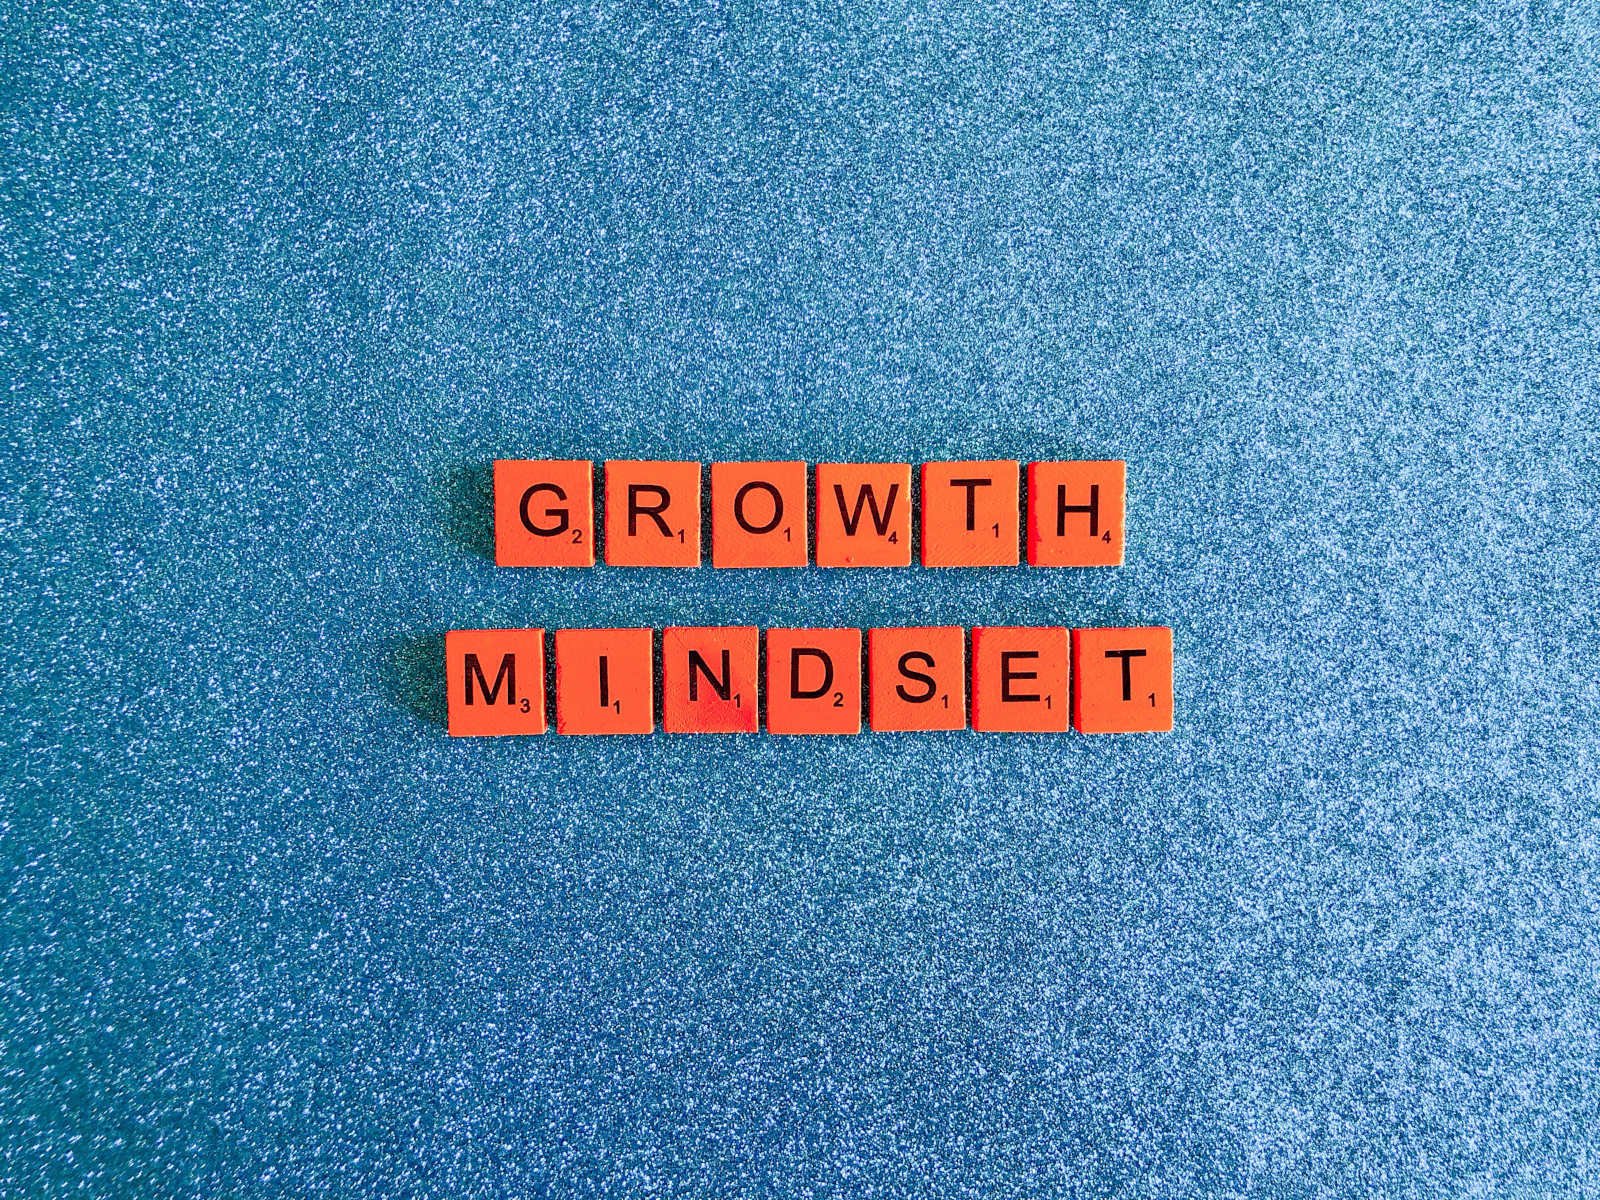 growth-mindset